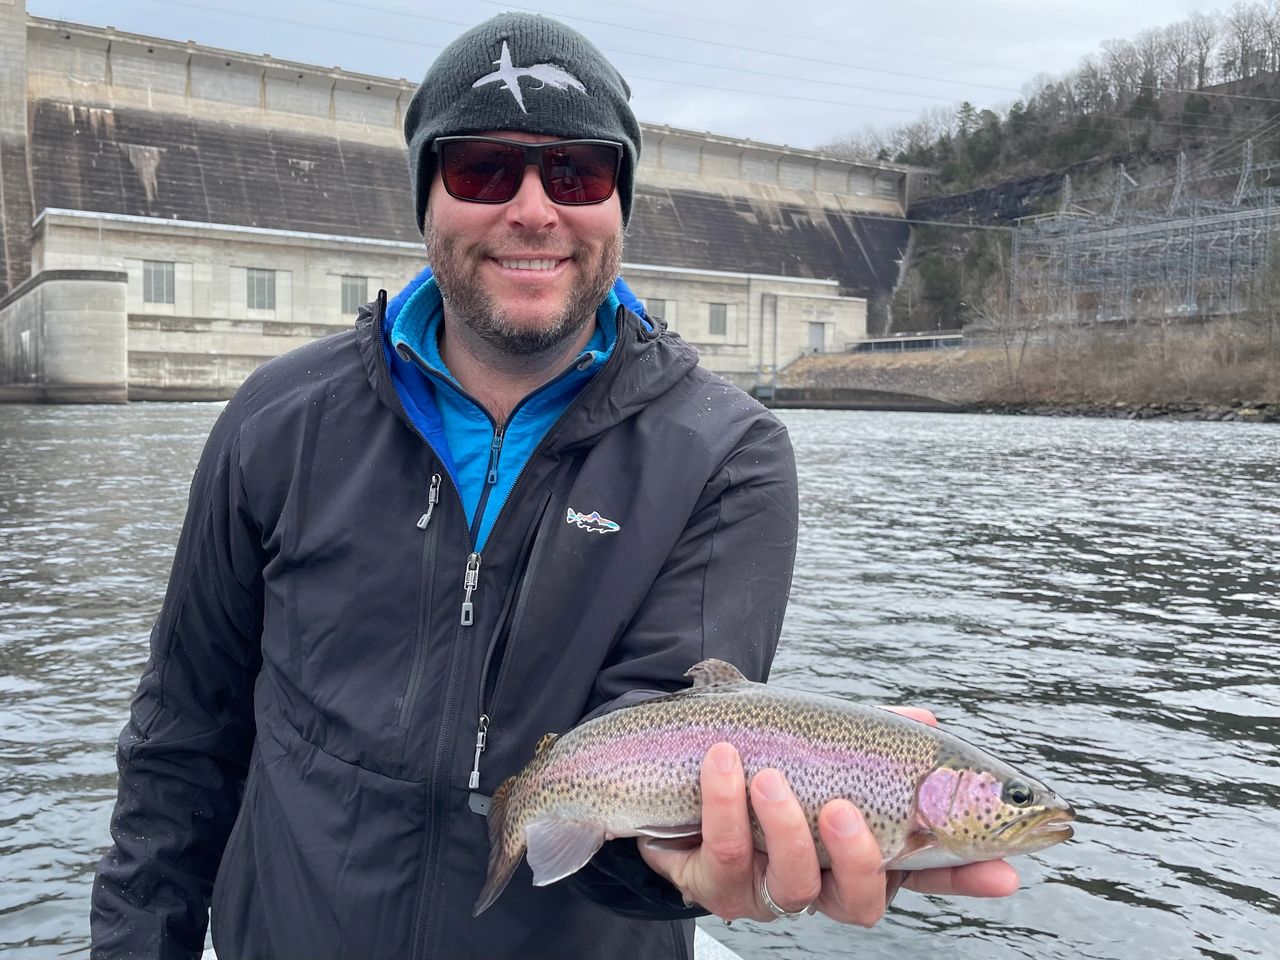 February 2022 Fly Fishing The White River, Arkansas - Day 1